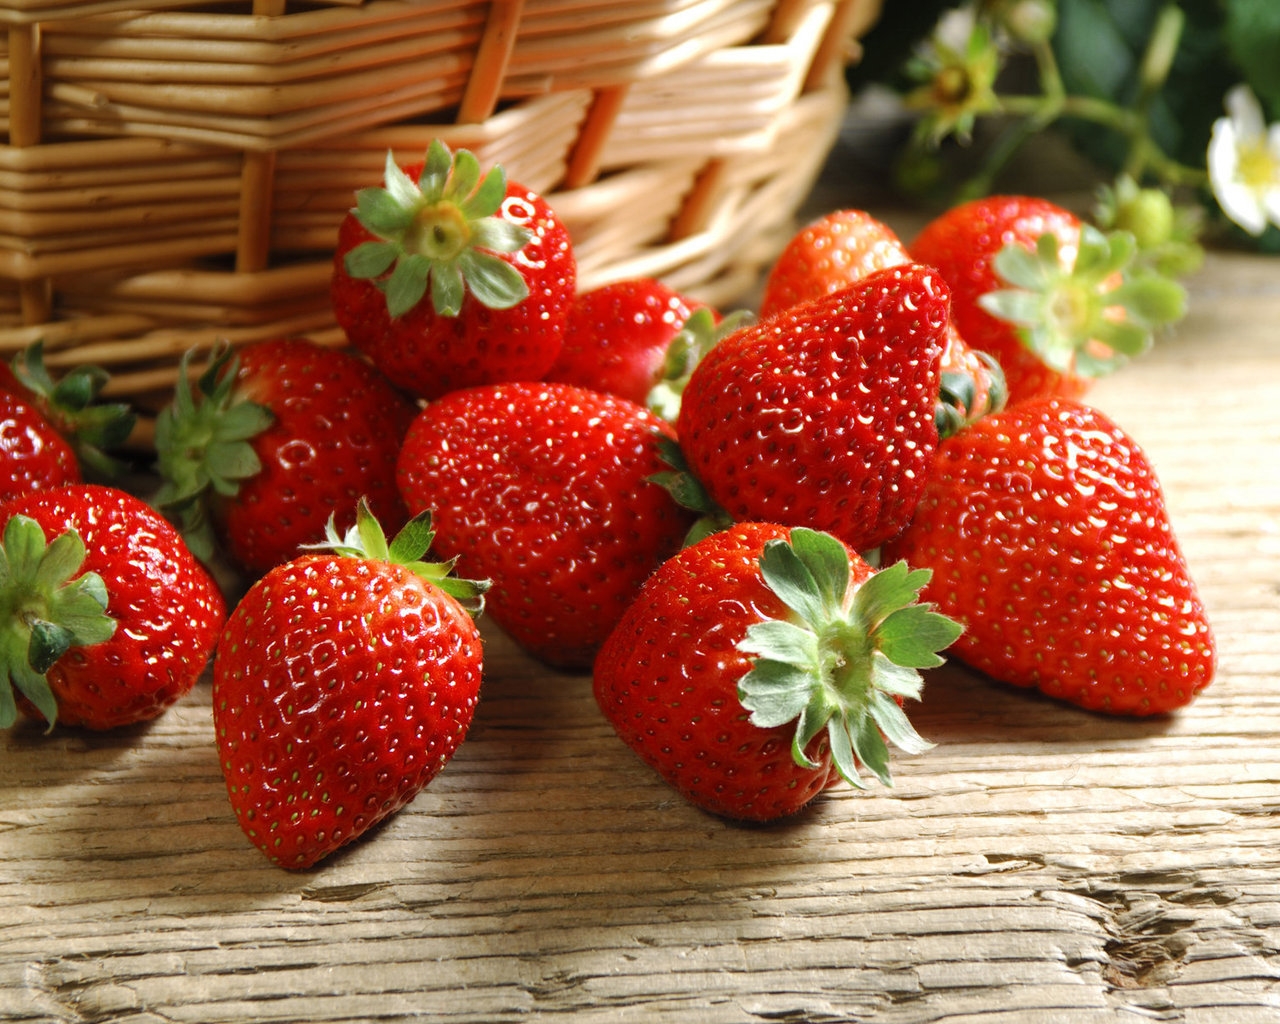 Ripe strawberries for 1280 x 1024 resolution